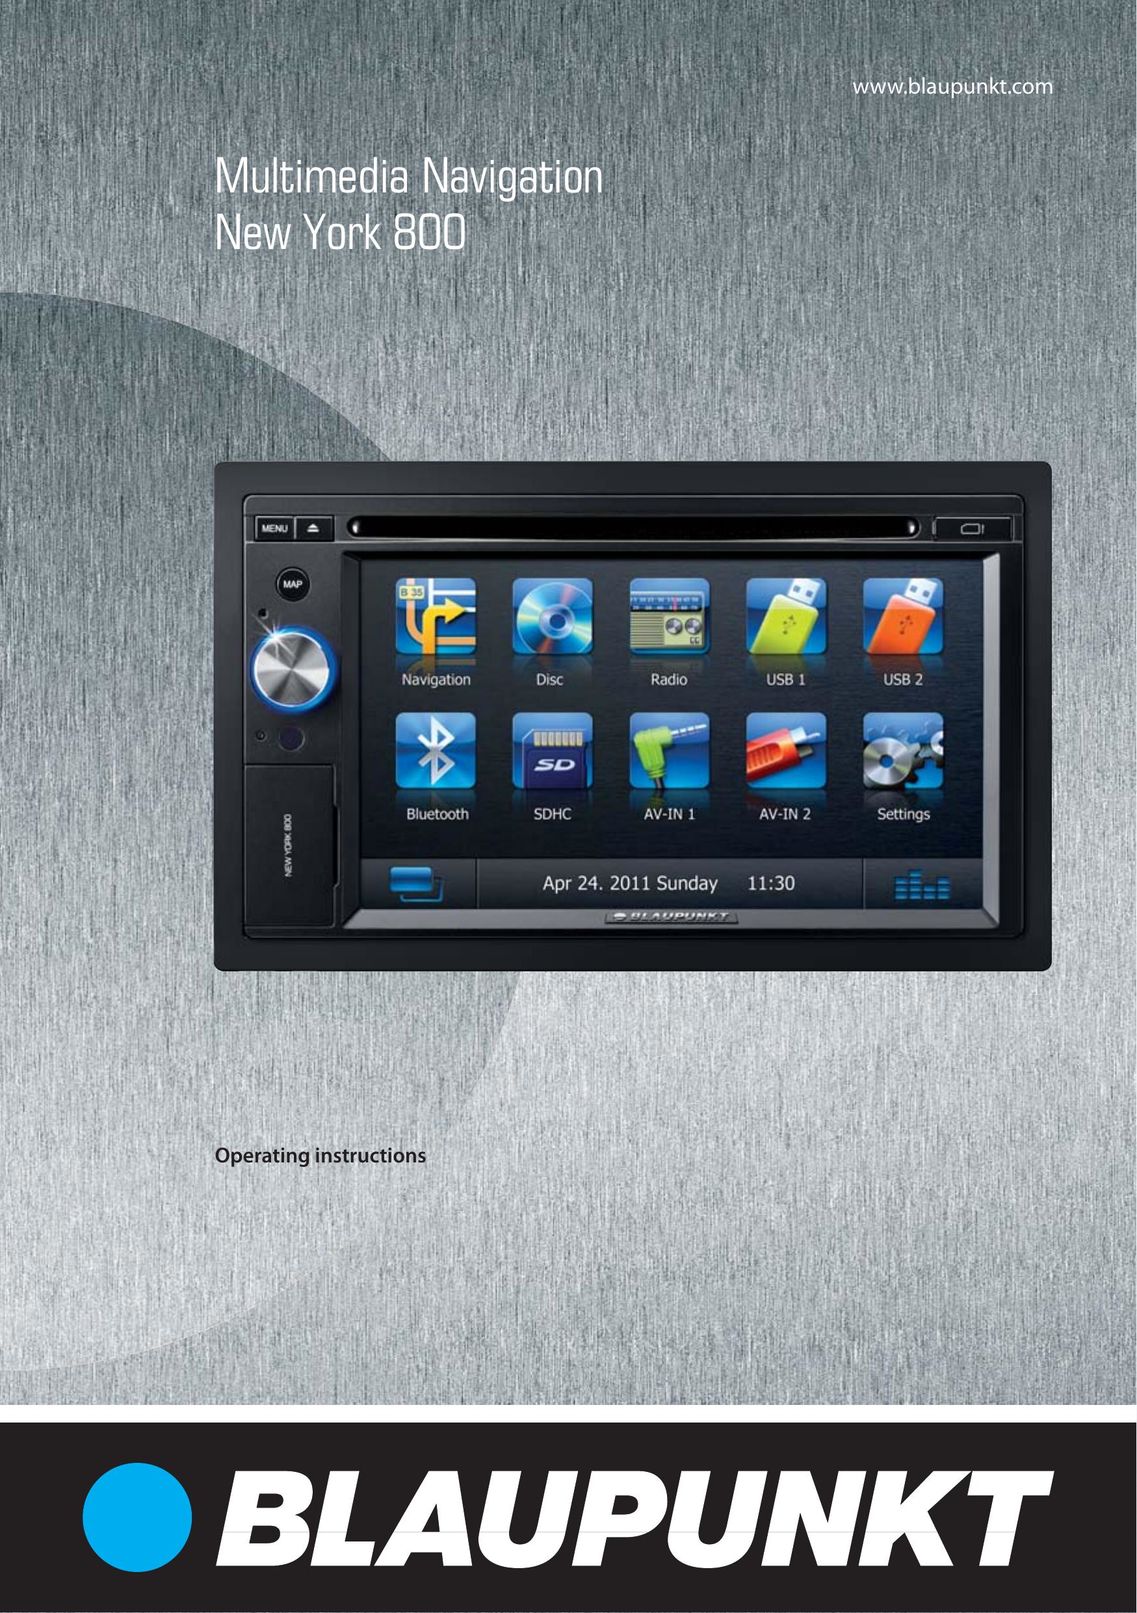 Blaupunkt 800 Car Stereo System User Manual